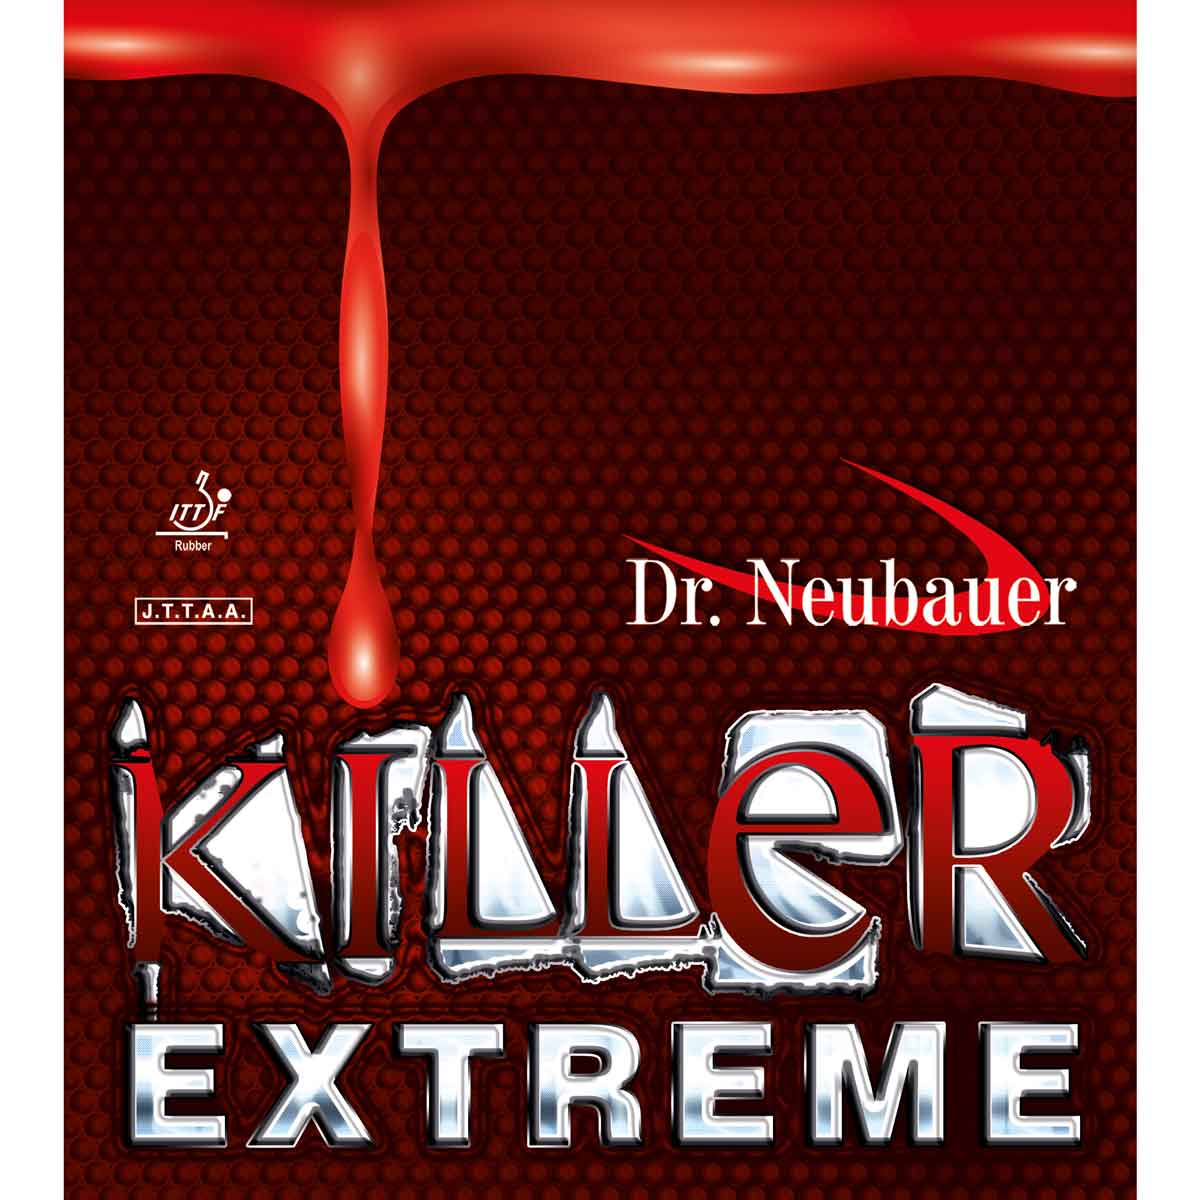 Dr. Neubauer Rubber Killer Extreme